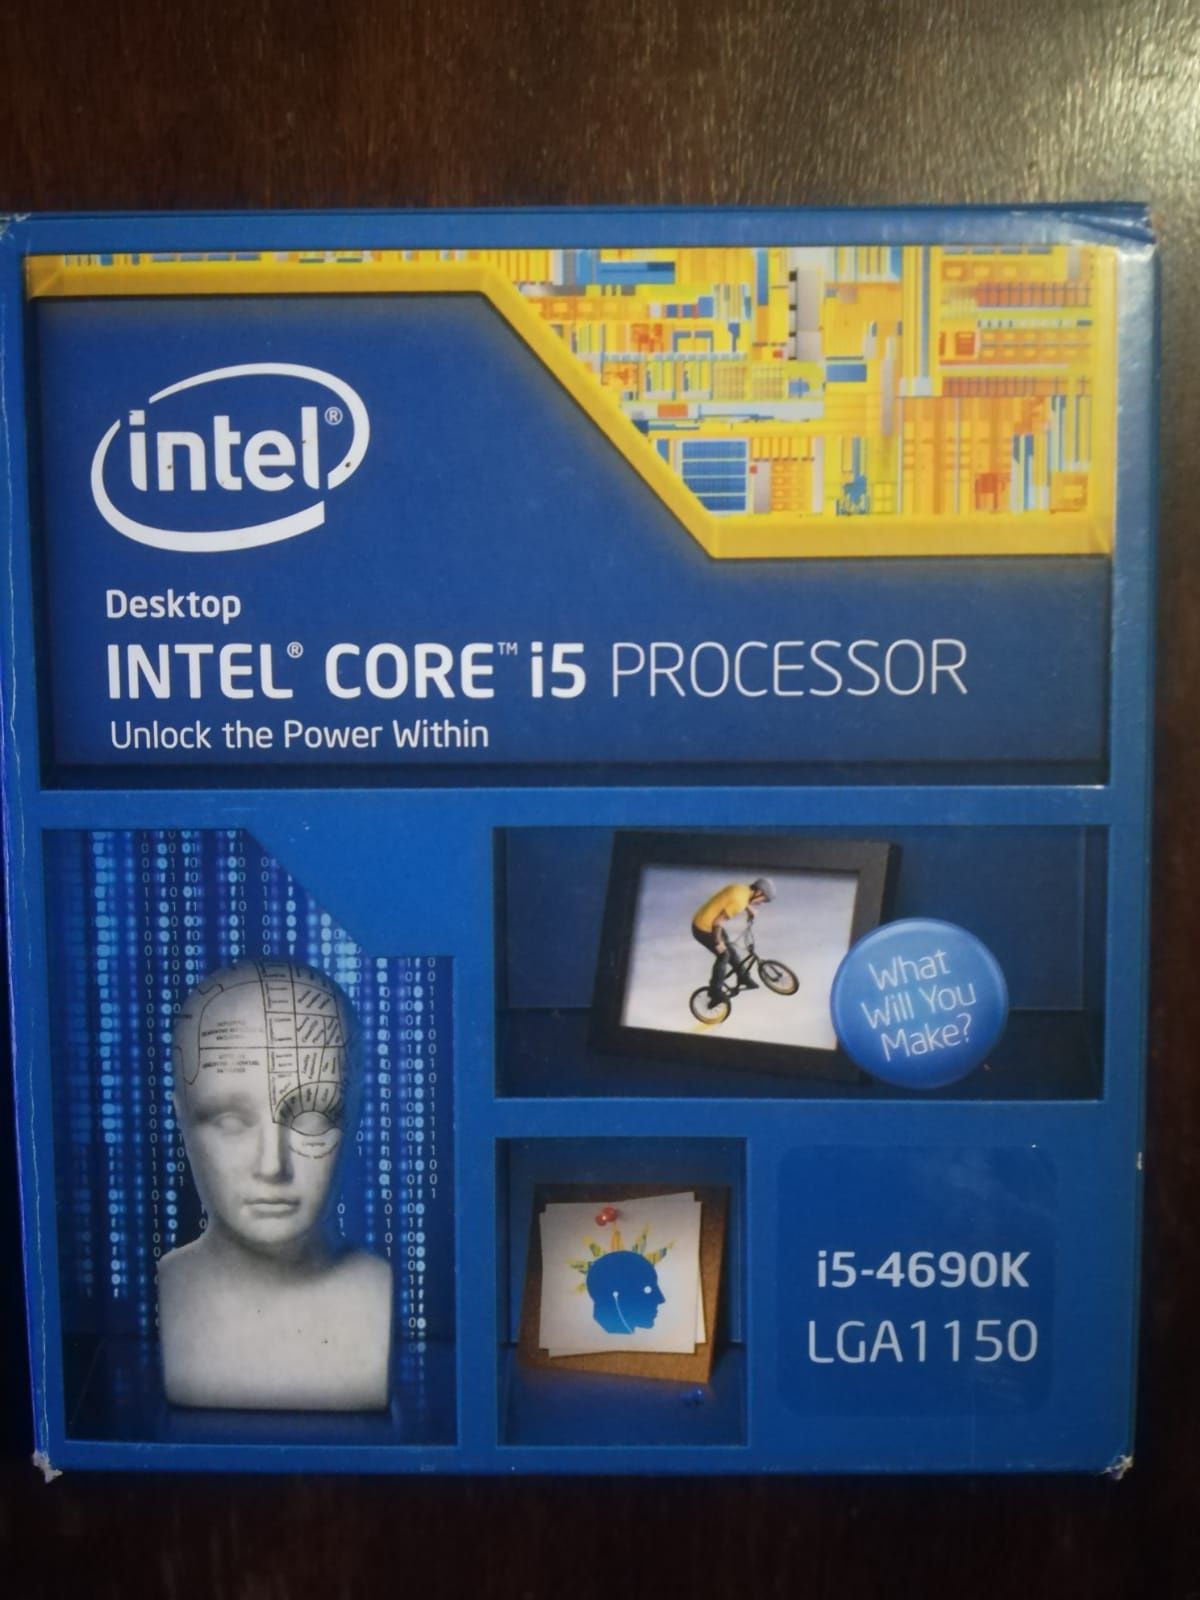 Intel core i5 4690k